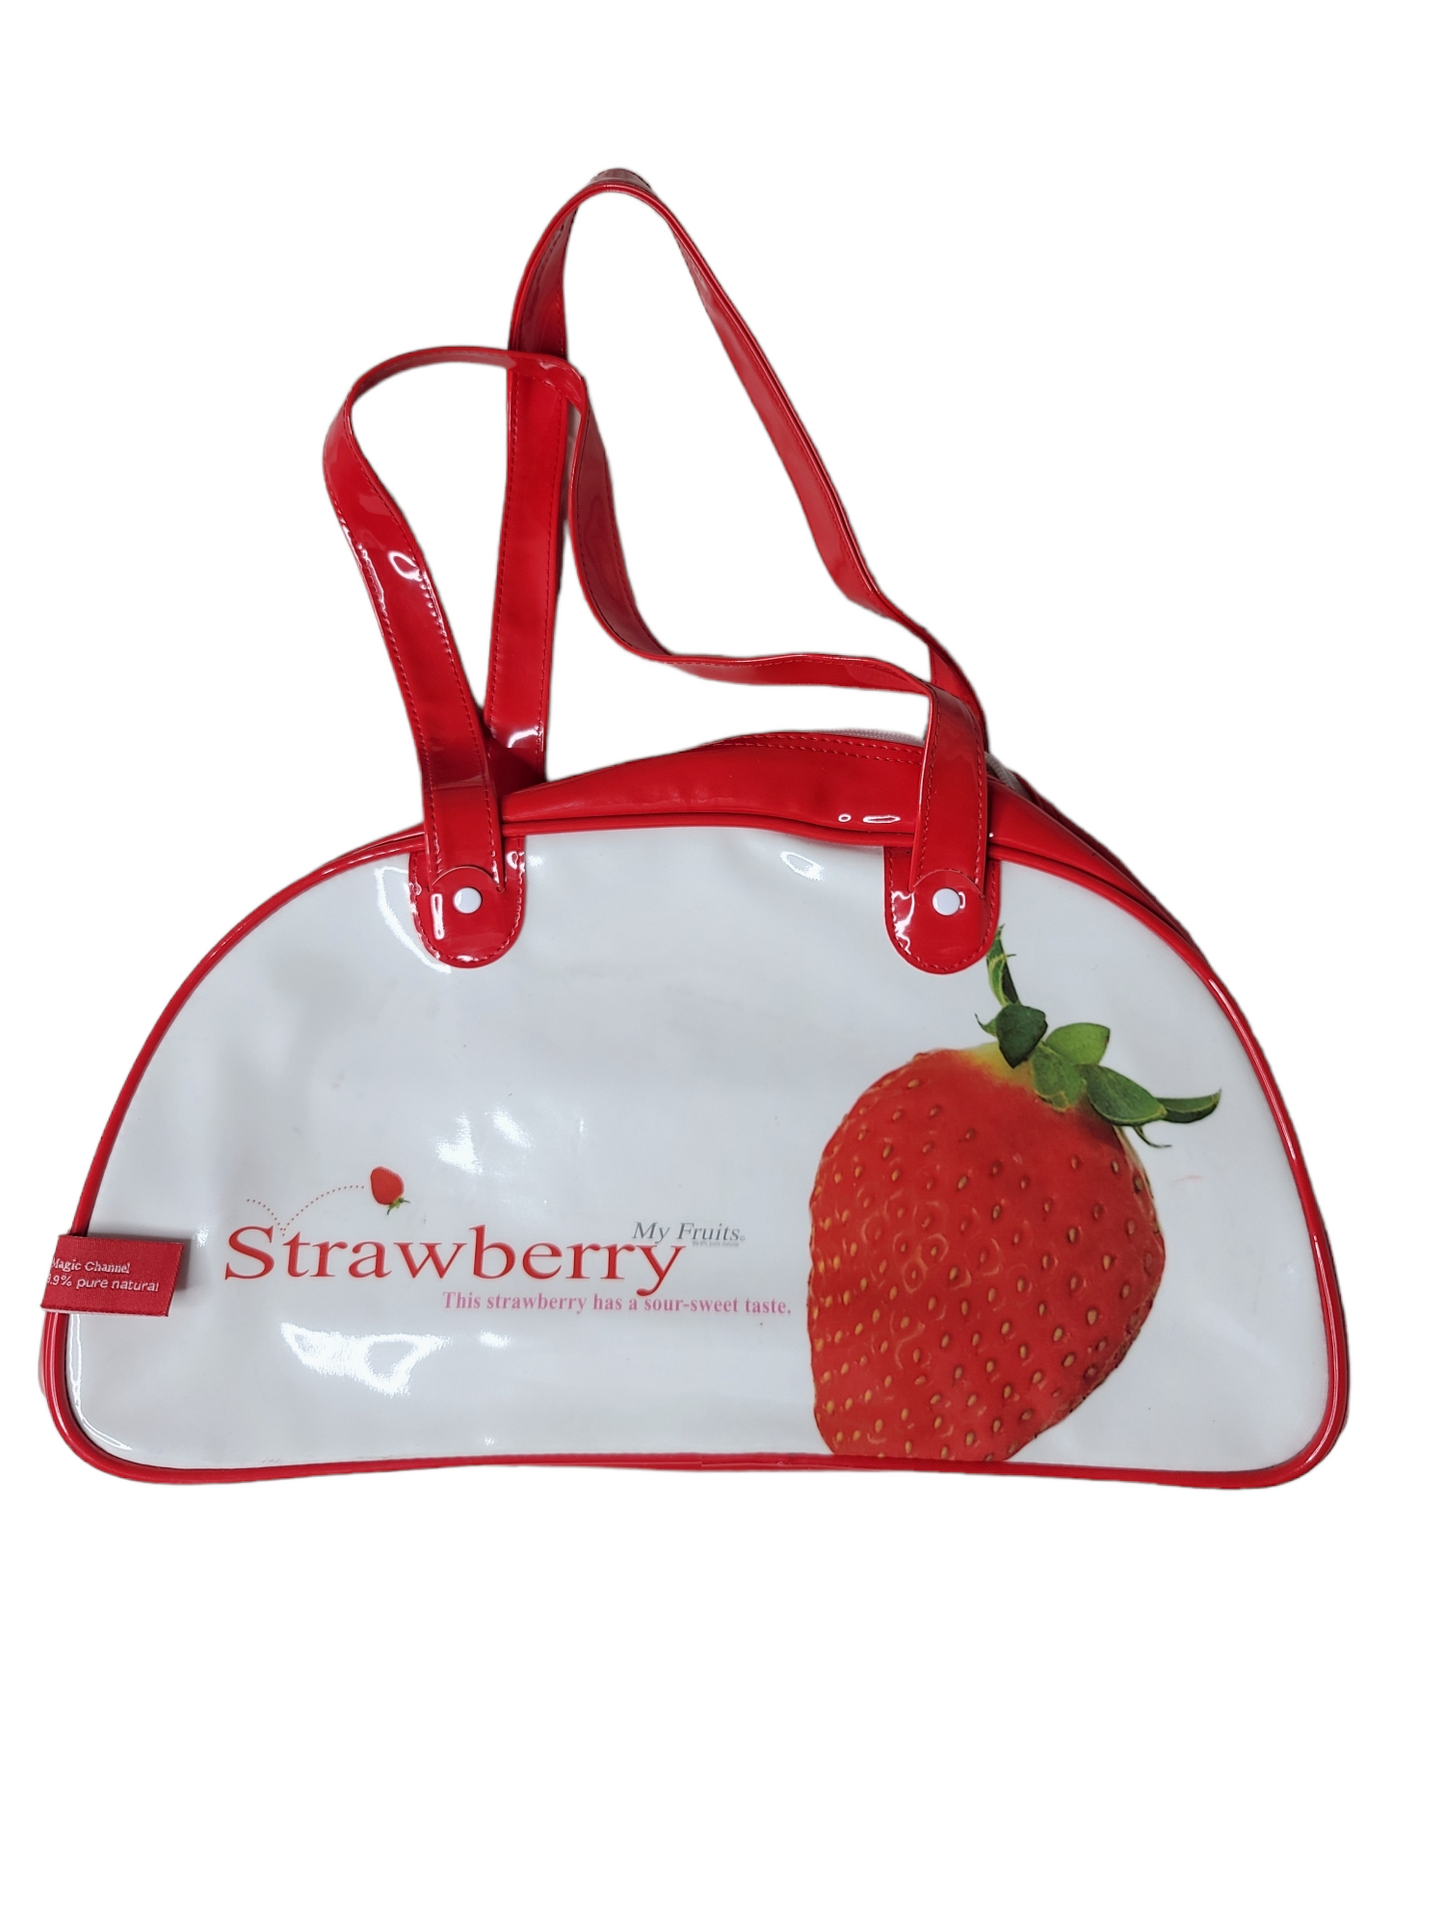 Strawberry bag sac y2k 2000 archive fashion cybery2k kawaii kidcore harajuku printed kitch 3d